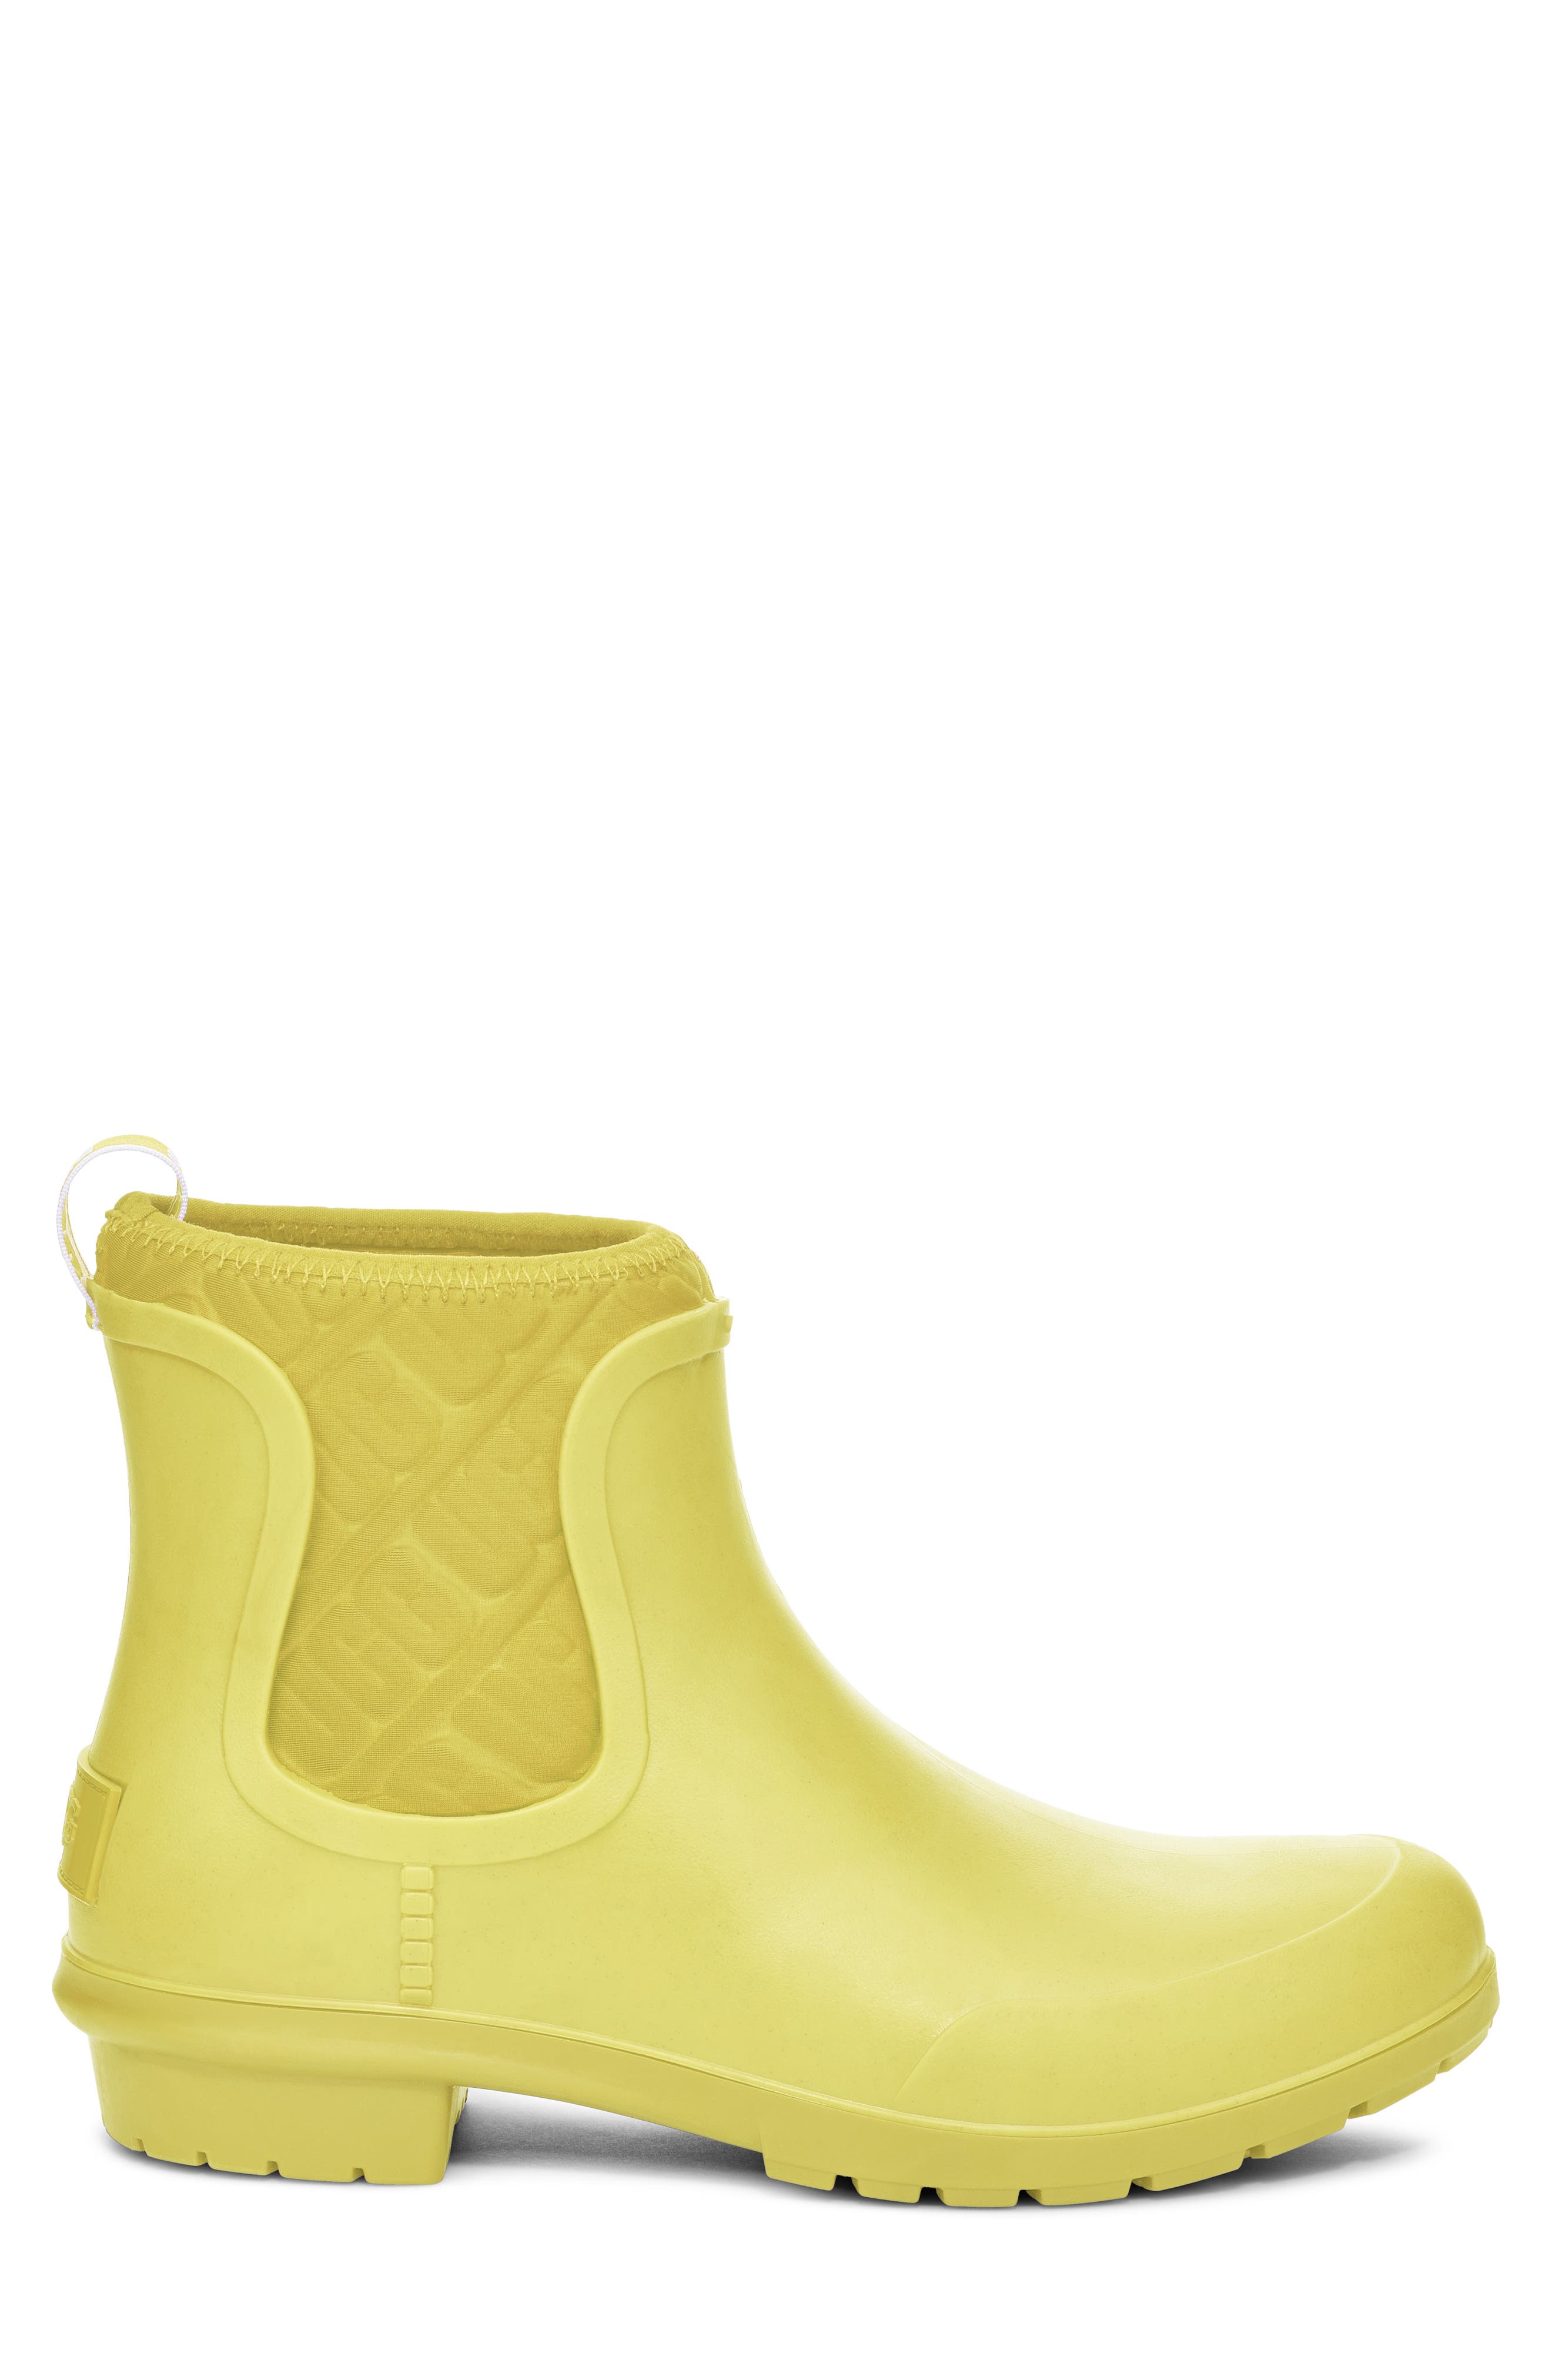 yellow ugg boots